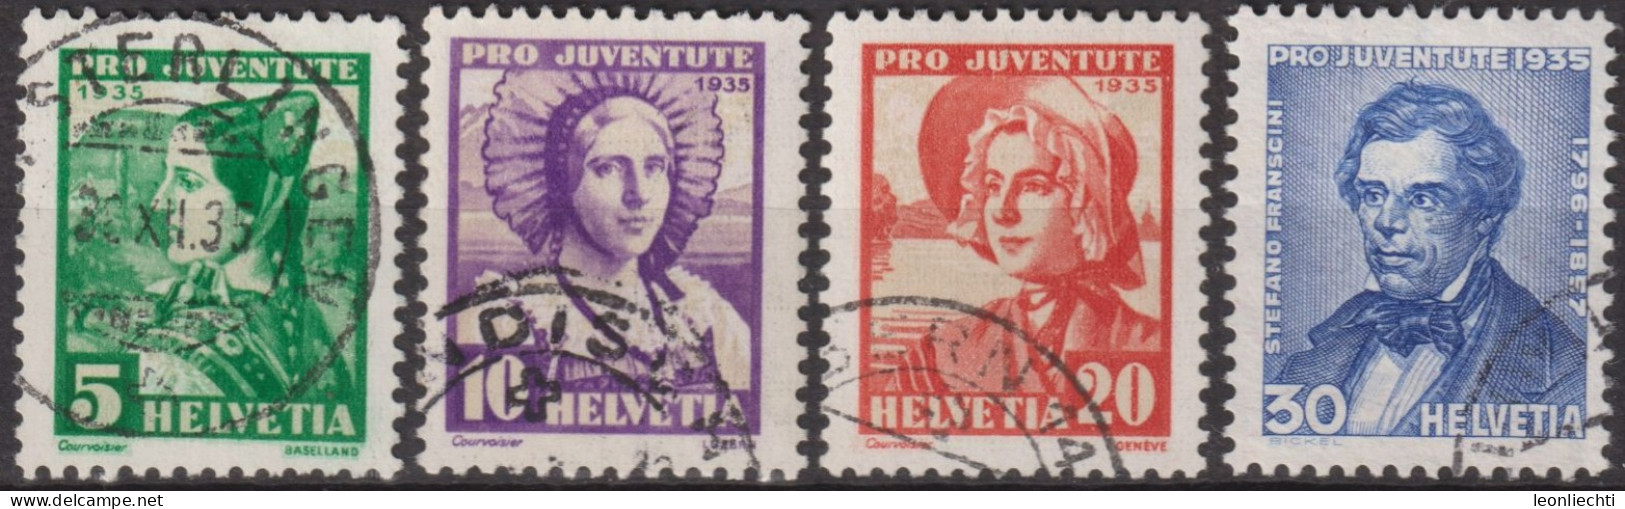 1935 Schweiz / Pro Juventute ° Zum:CH J73-J76, Mi:CH 287-290, Yt:CH 282-285, Frauentrachten, Stefano Franscini - Oblitérés